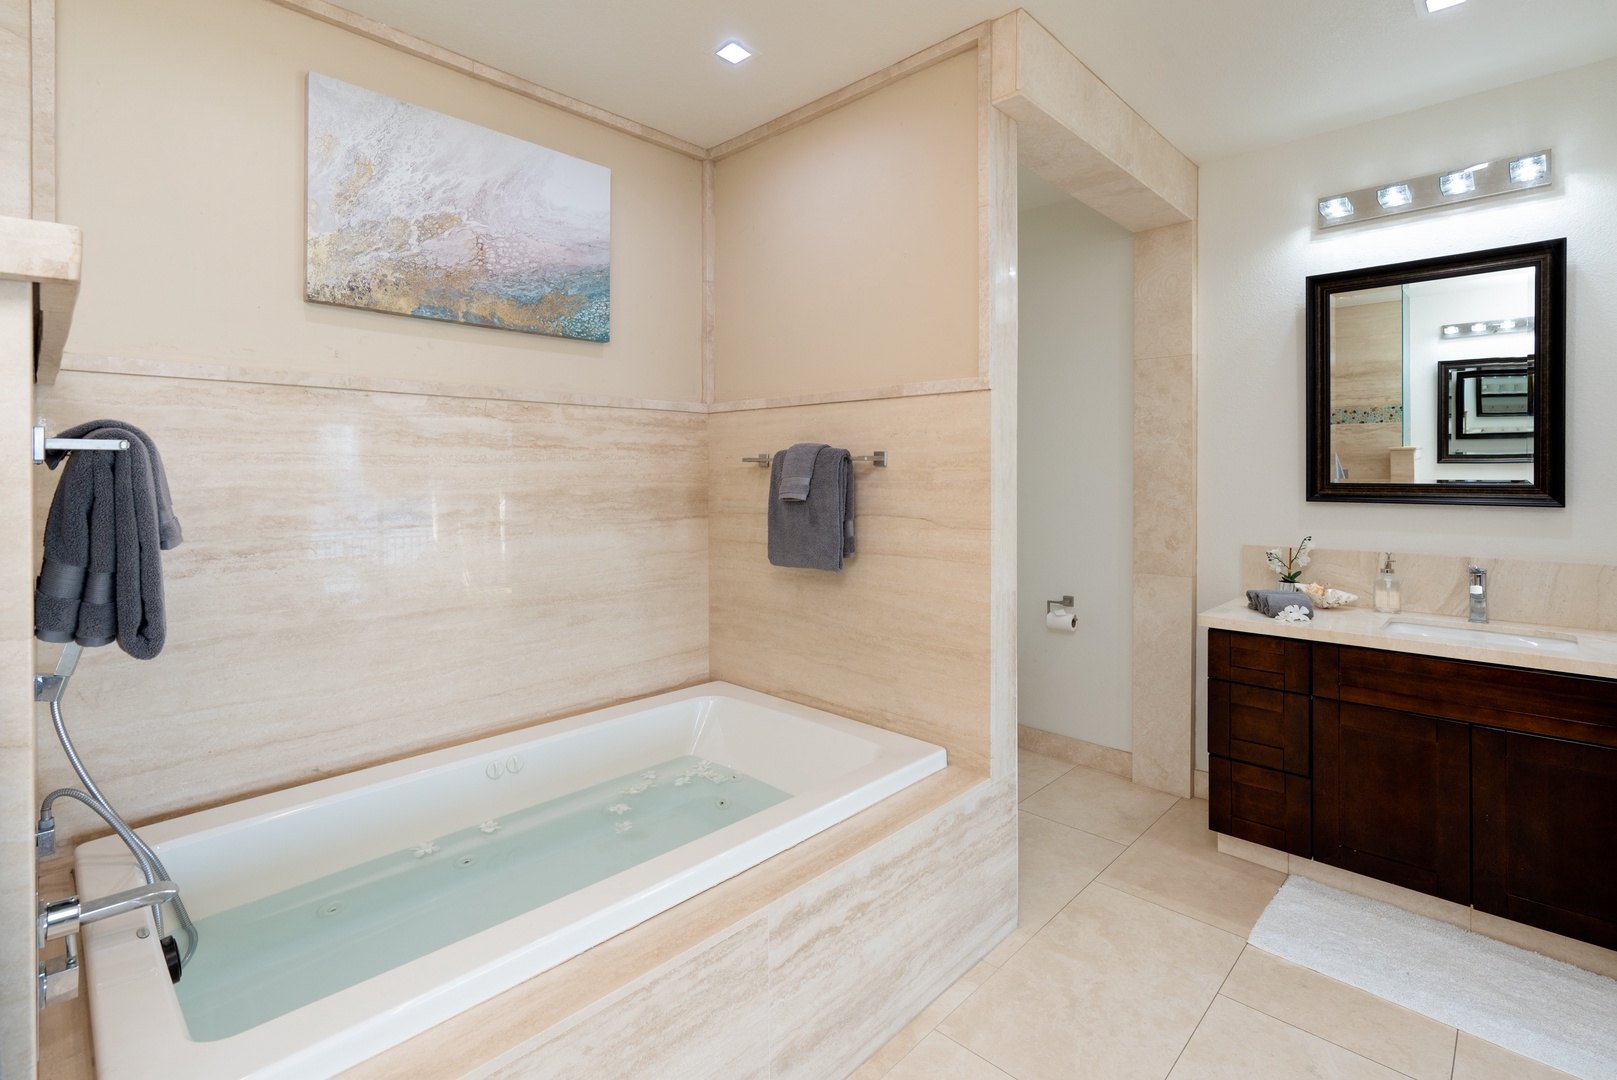 Honolulu Vacation Rentals, Wailupe Seaside - The large suite has luxurious bathroom ensuite.